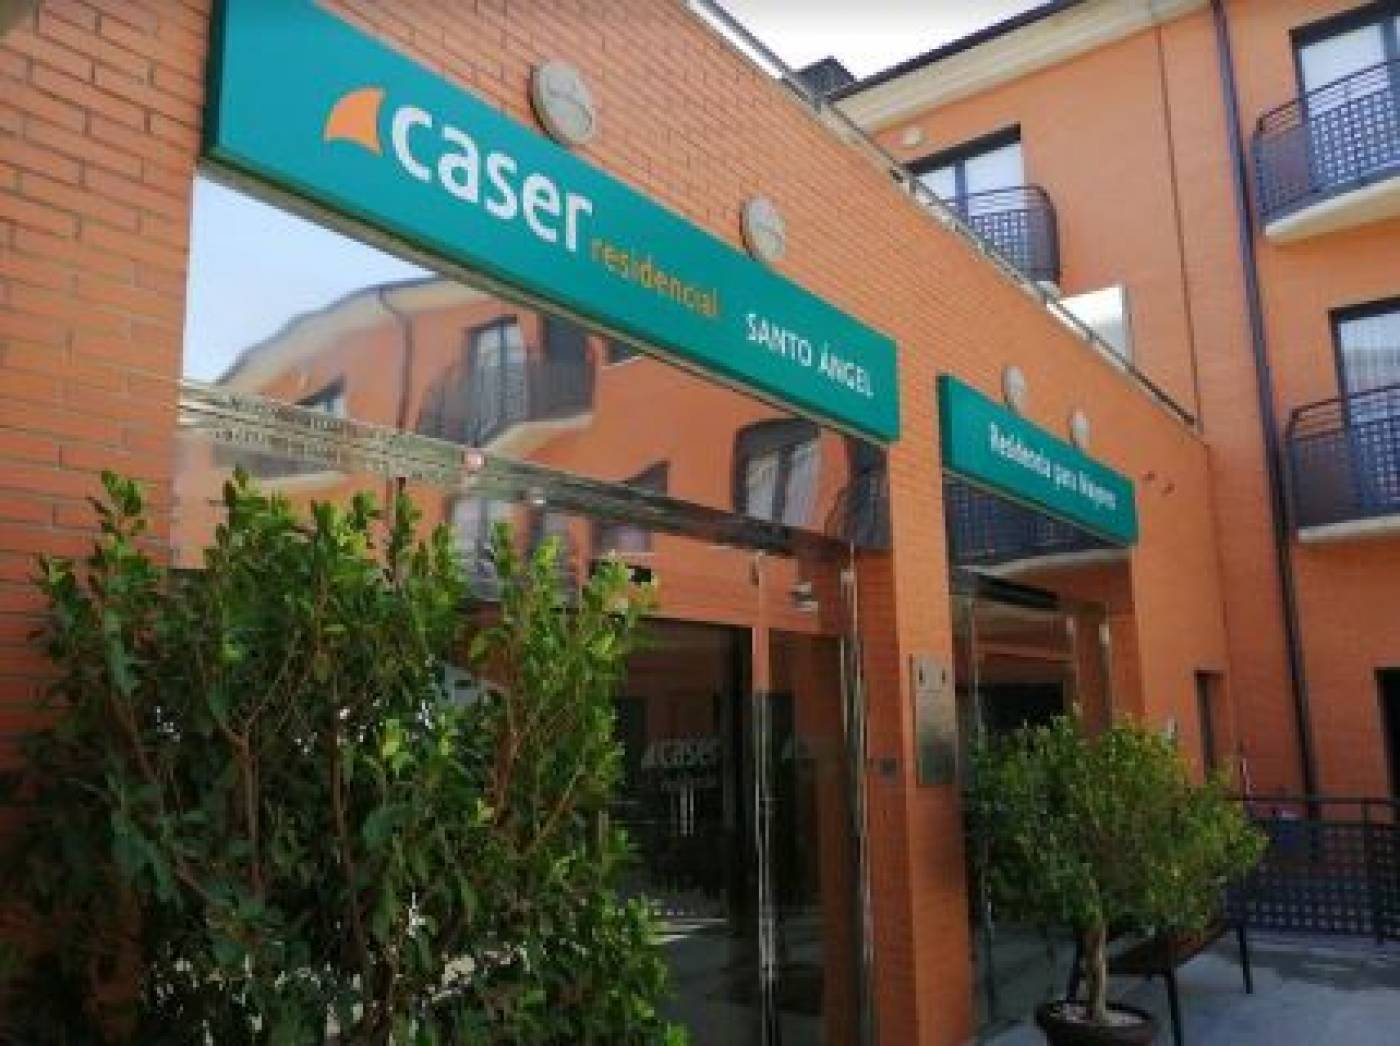 Caser Residencial Santo Ángel care home for the elderly in Murcia